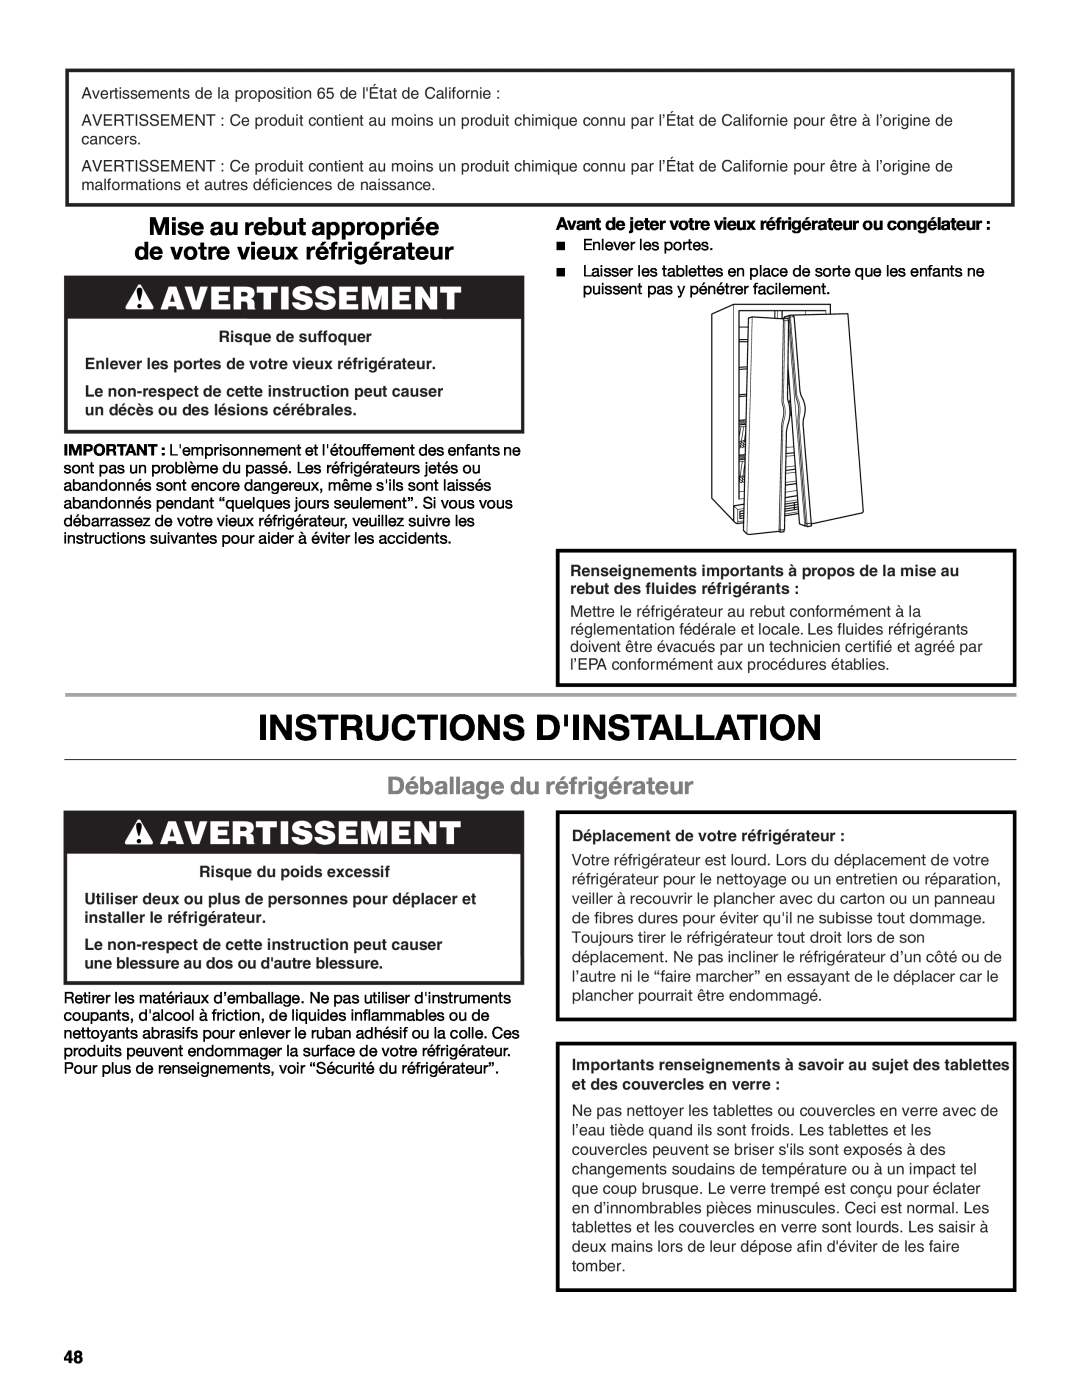 Whirlpool ED2KHAXVB Instructions Dinstallation, Avertissement, Déballage du réfrigérateur, Risque du poids excessif 